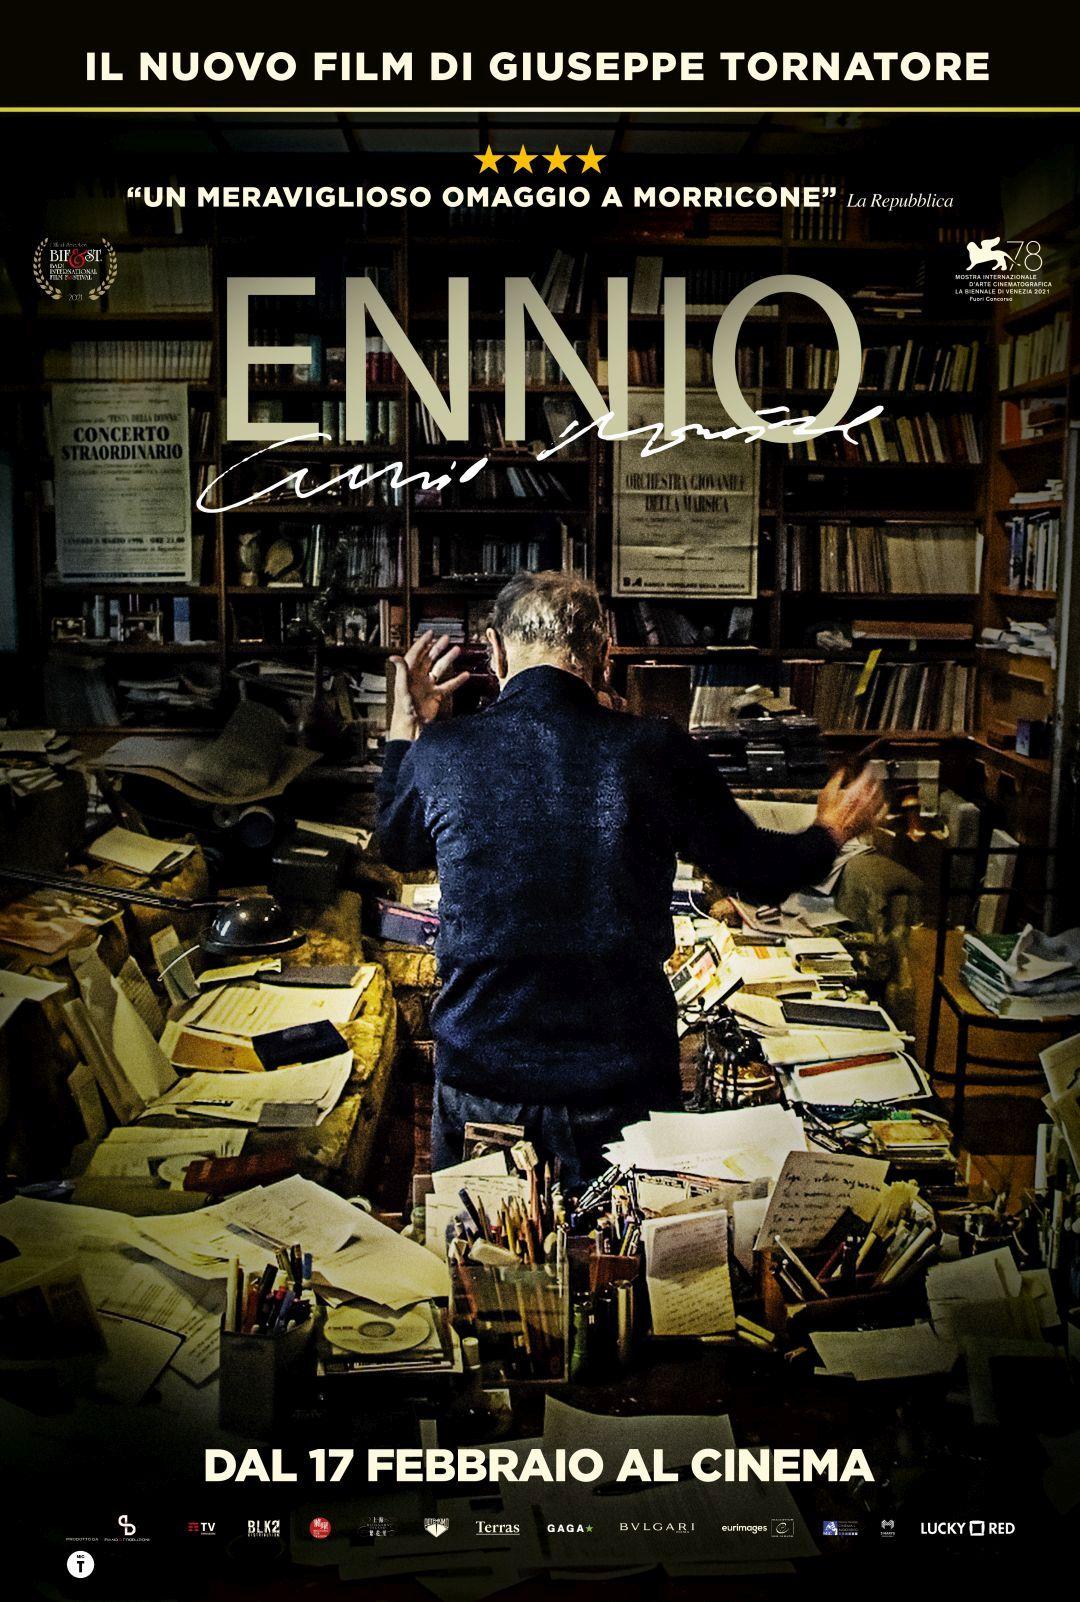 配樂大師顏尼歐Ennio: The Maestro